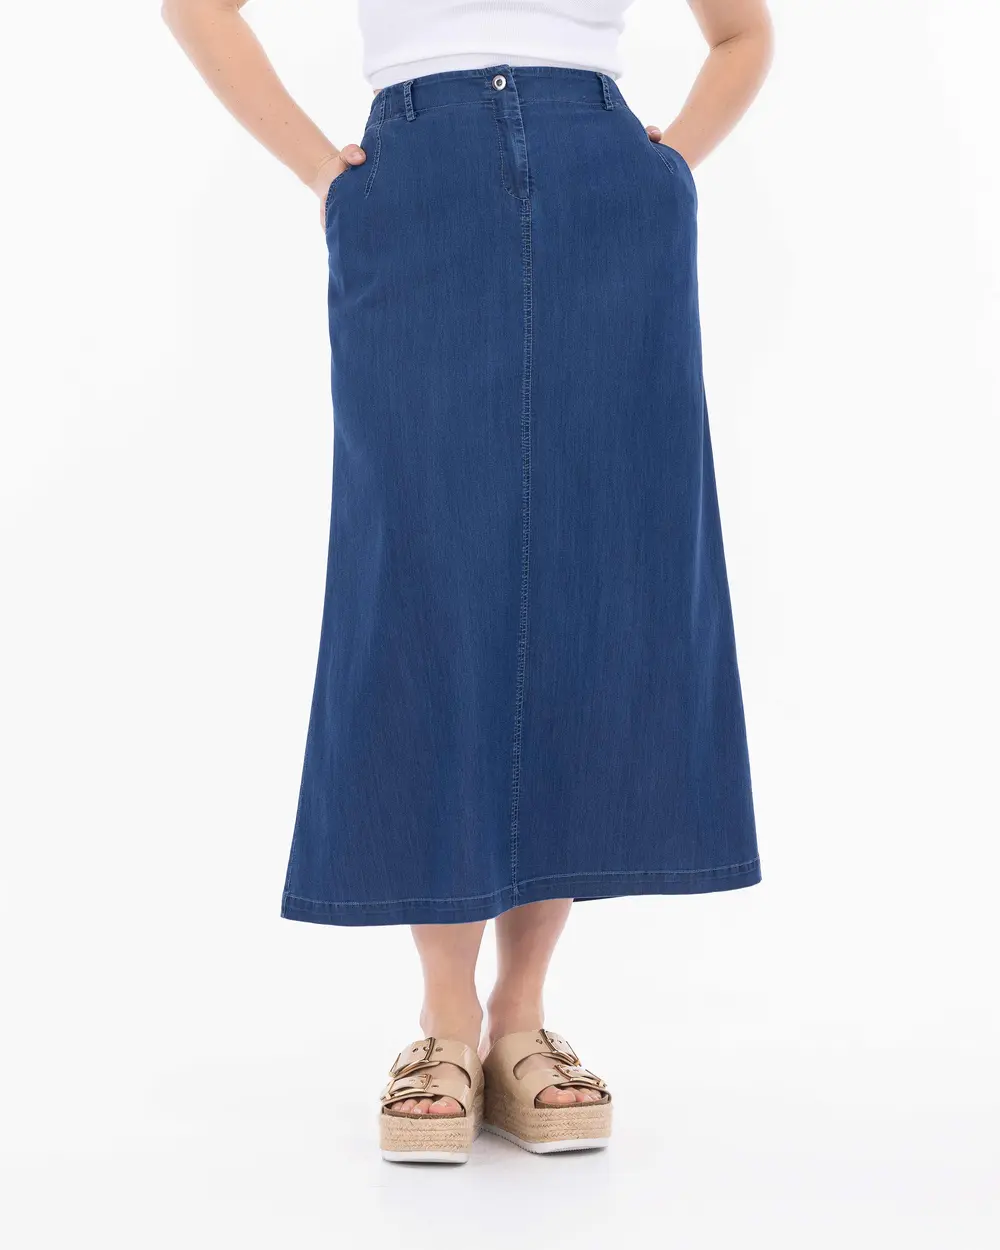 Plus Size Elastic Waist Jean Skirt